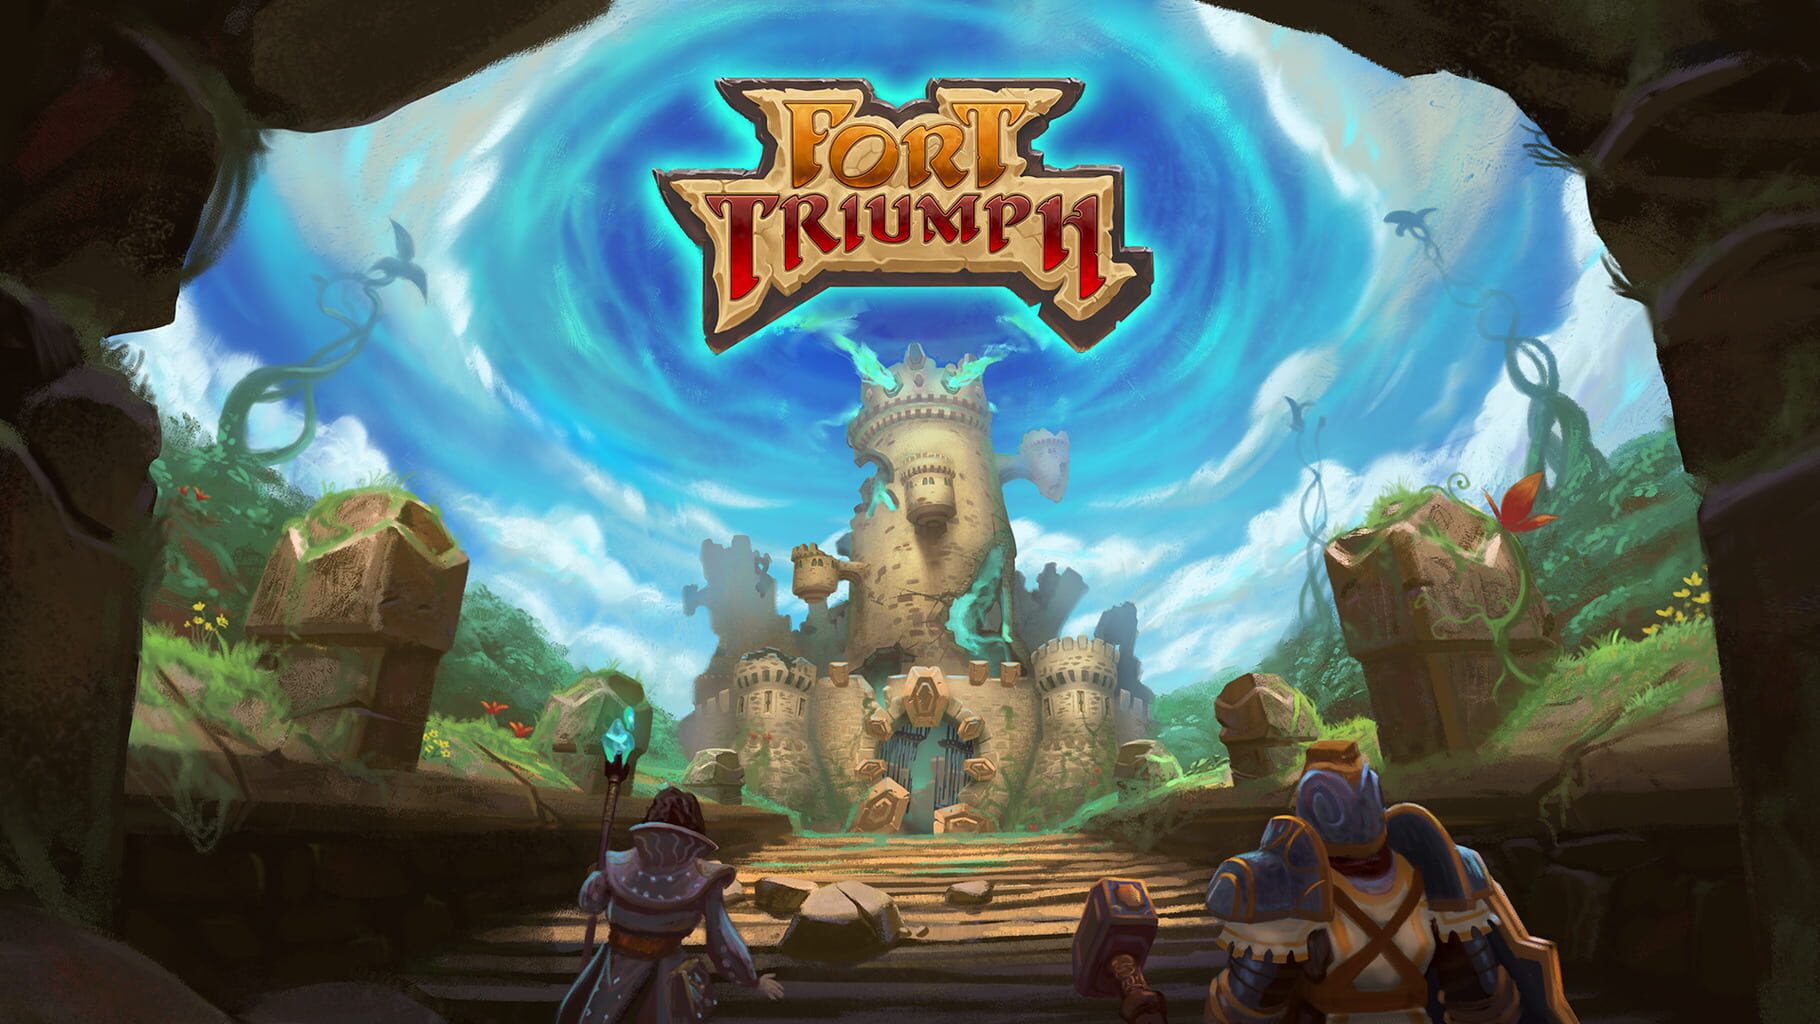 Fort Triumph artwork